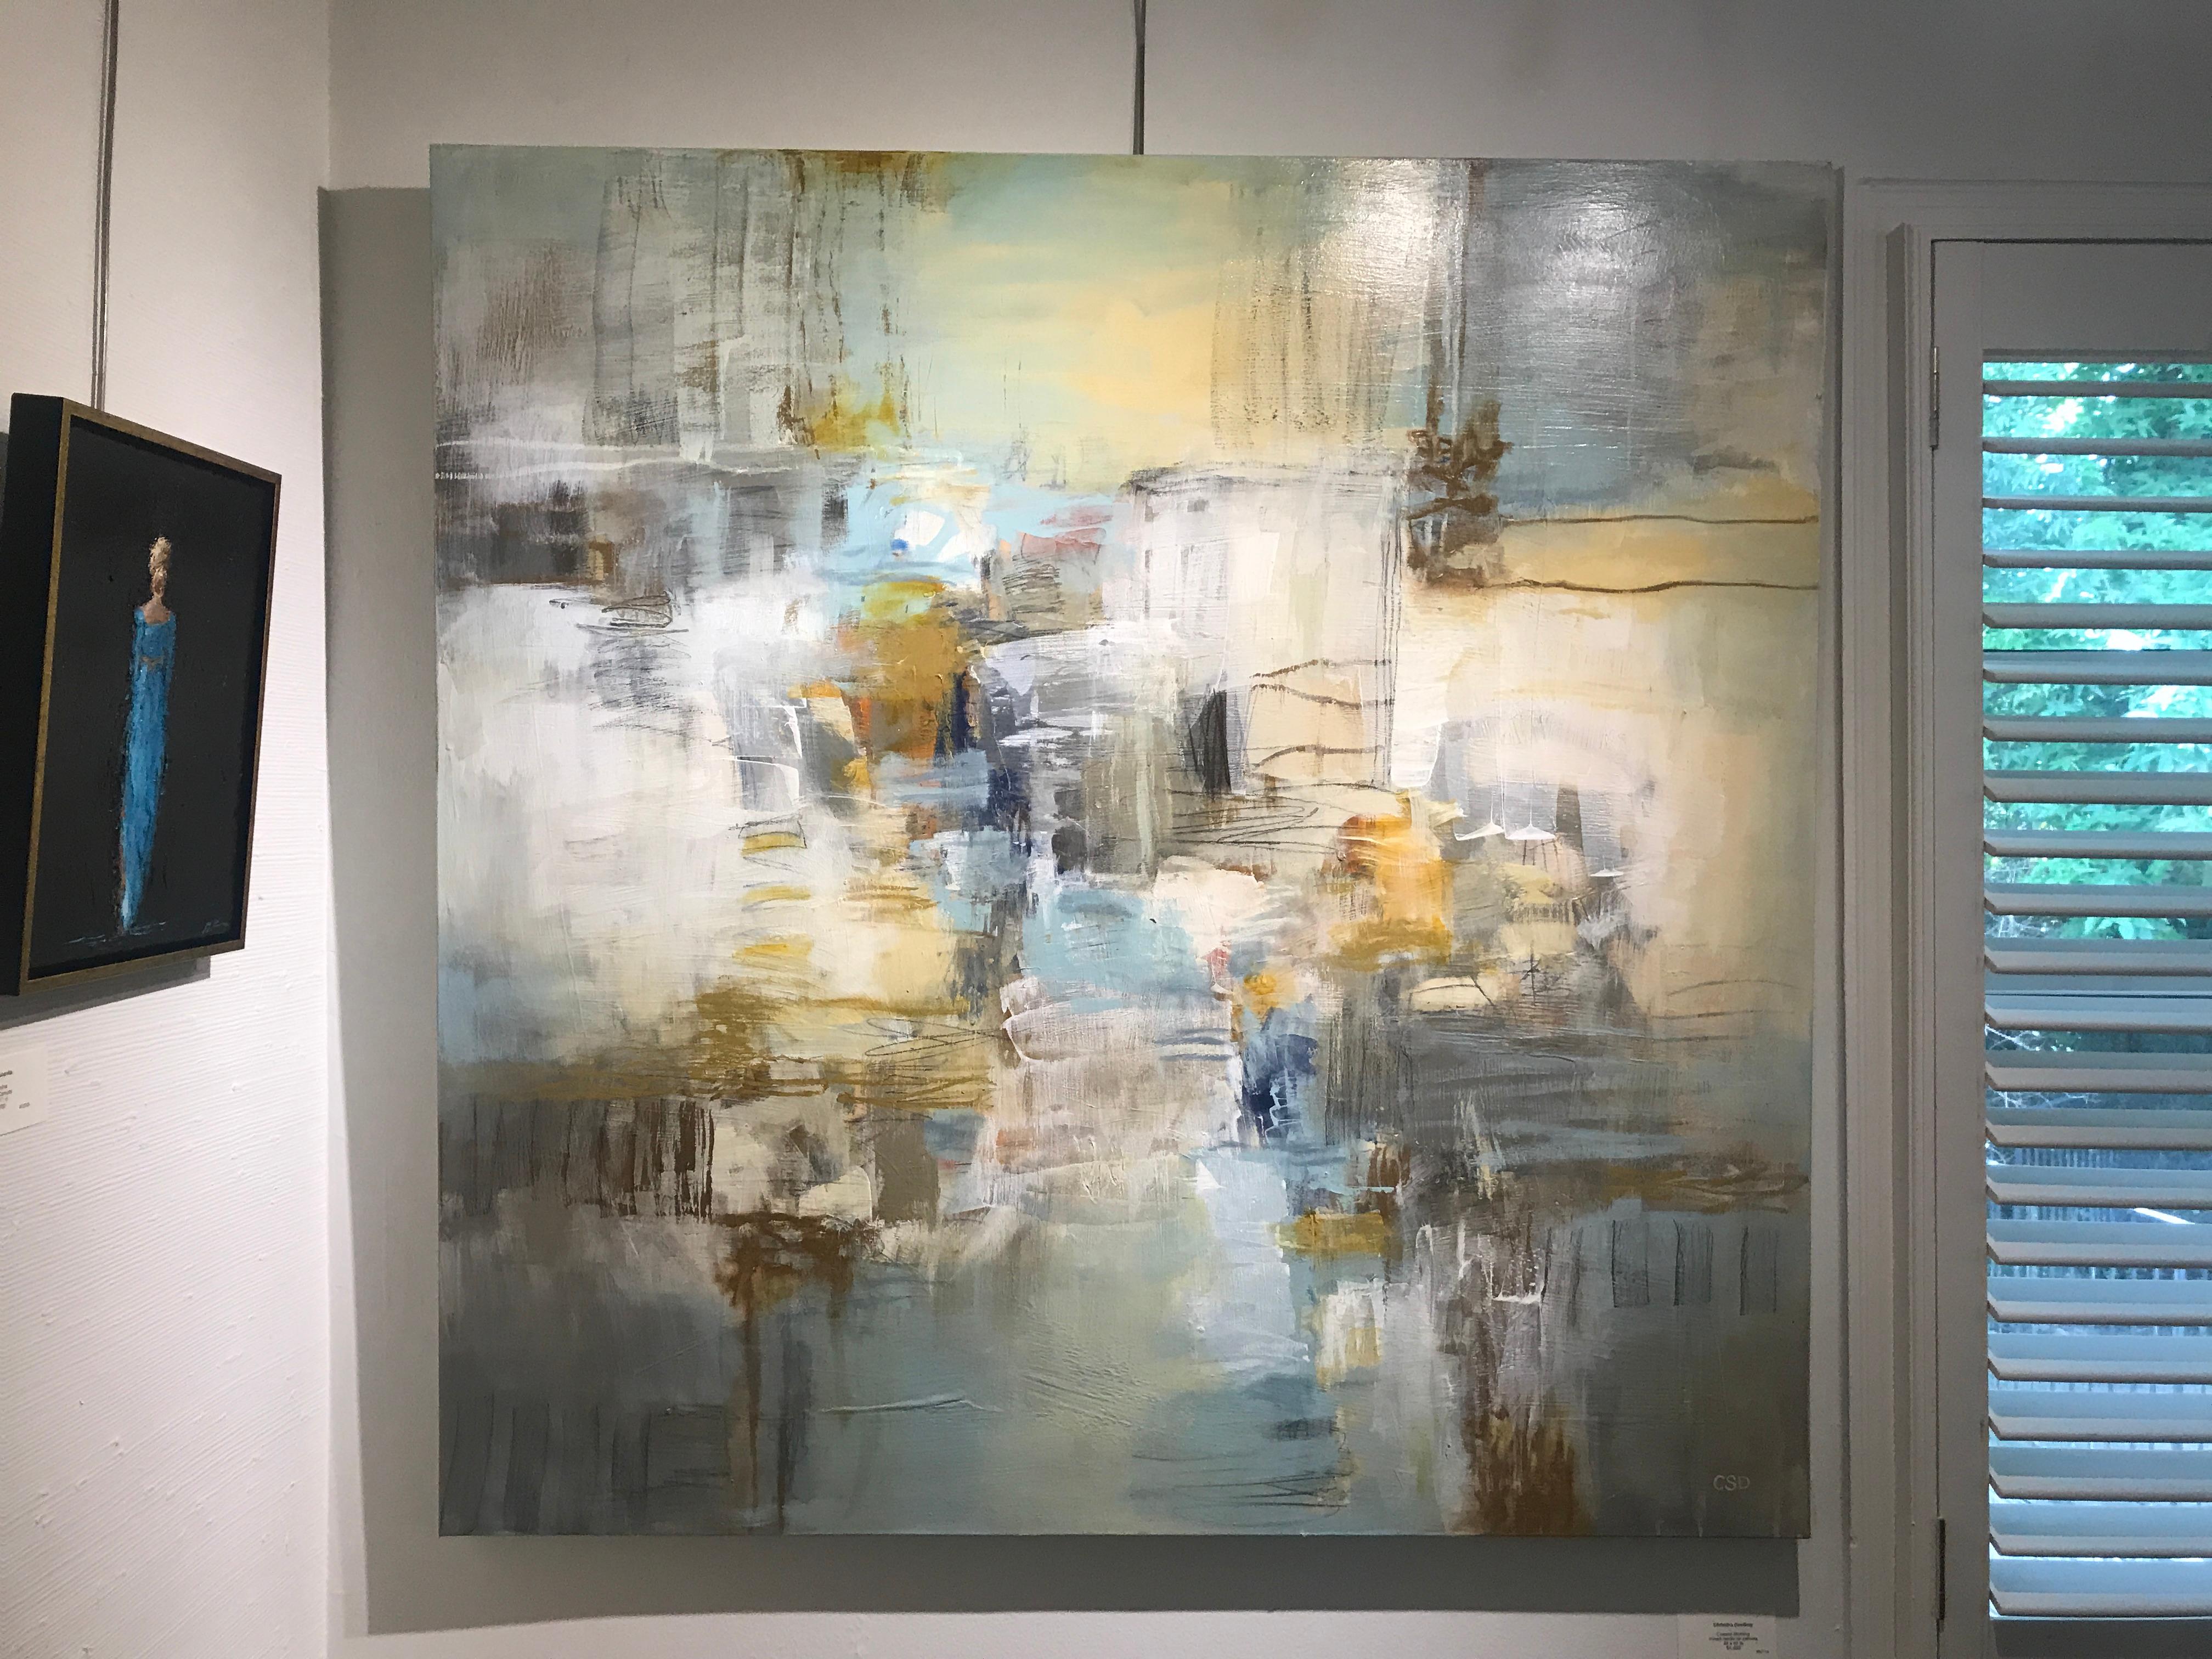 Coastal Morning, Christina Doelling 2018 Abstract Mixed Media on Canvas Painting 1